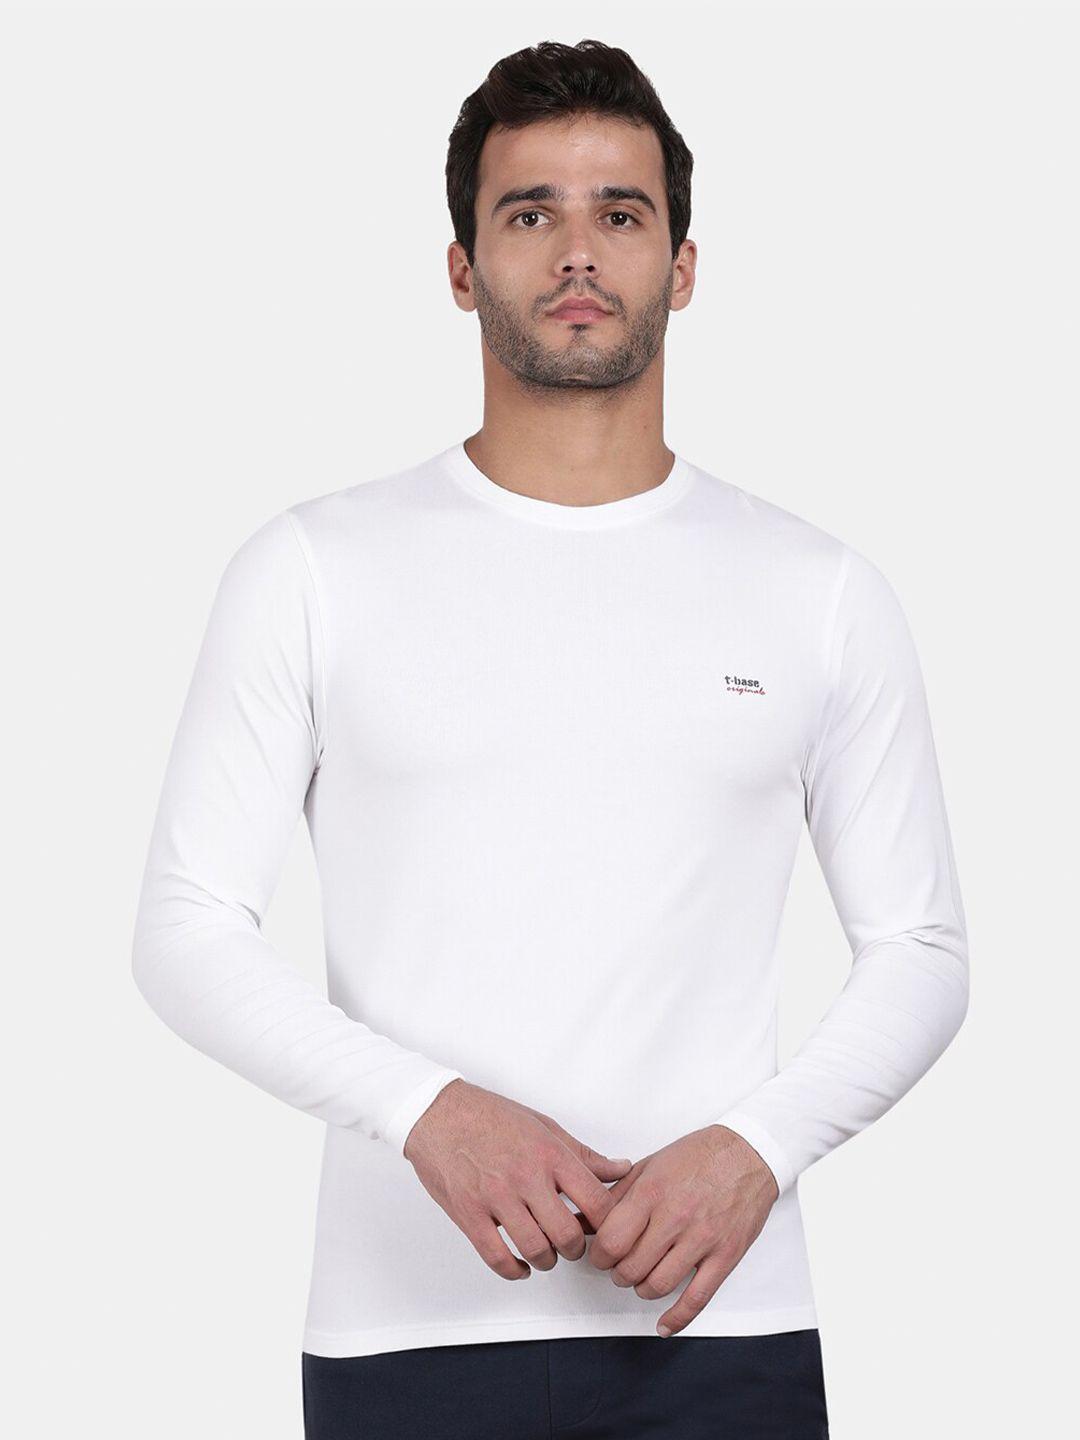 t-base-men-off-white-solid-t-shirt